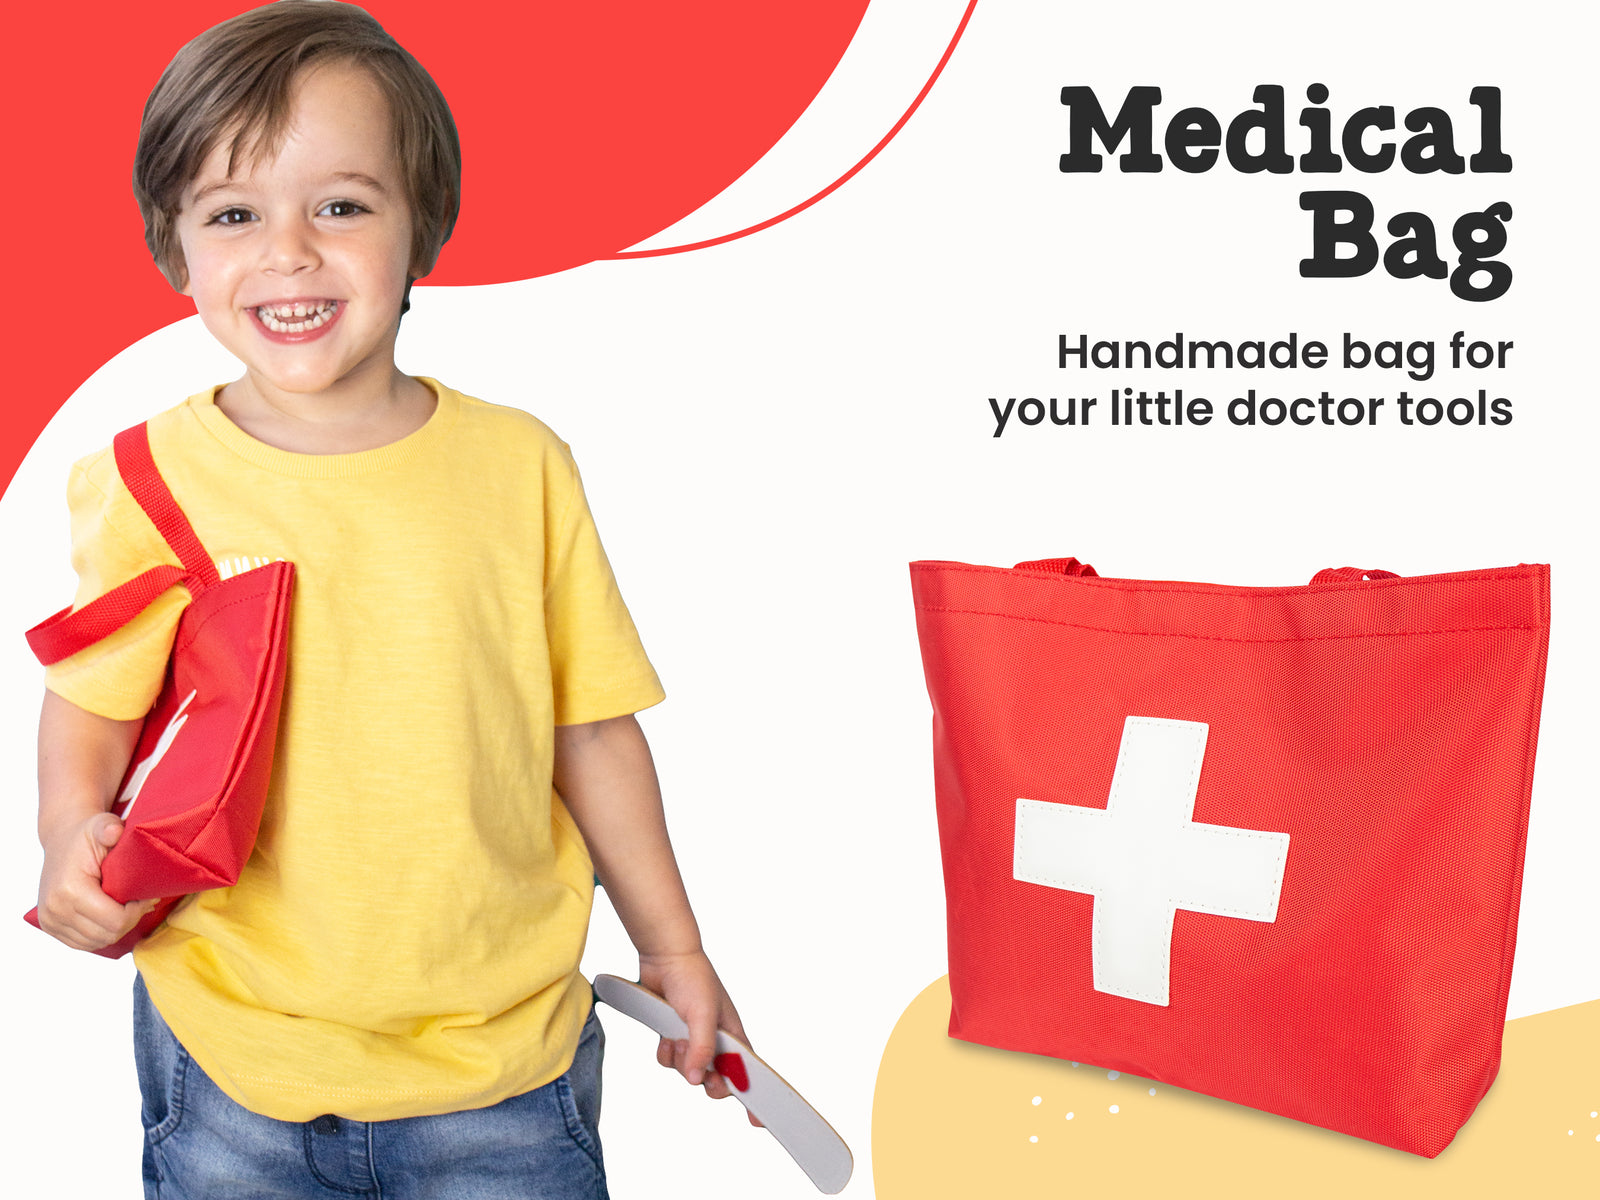 Doctor Kit for Kids, Doctor Kit Toddlers 3-5